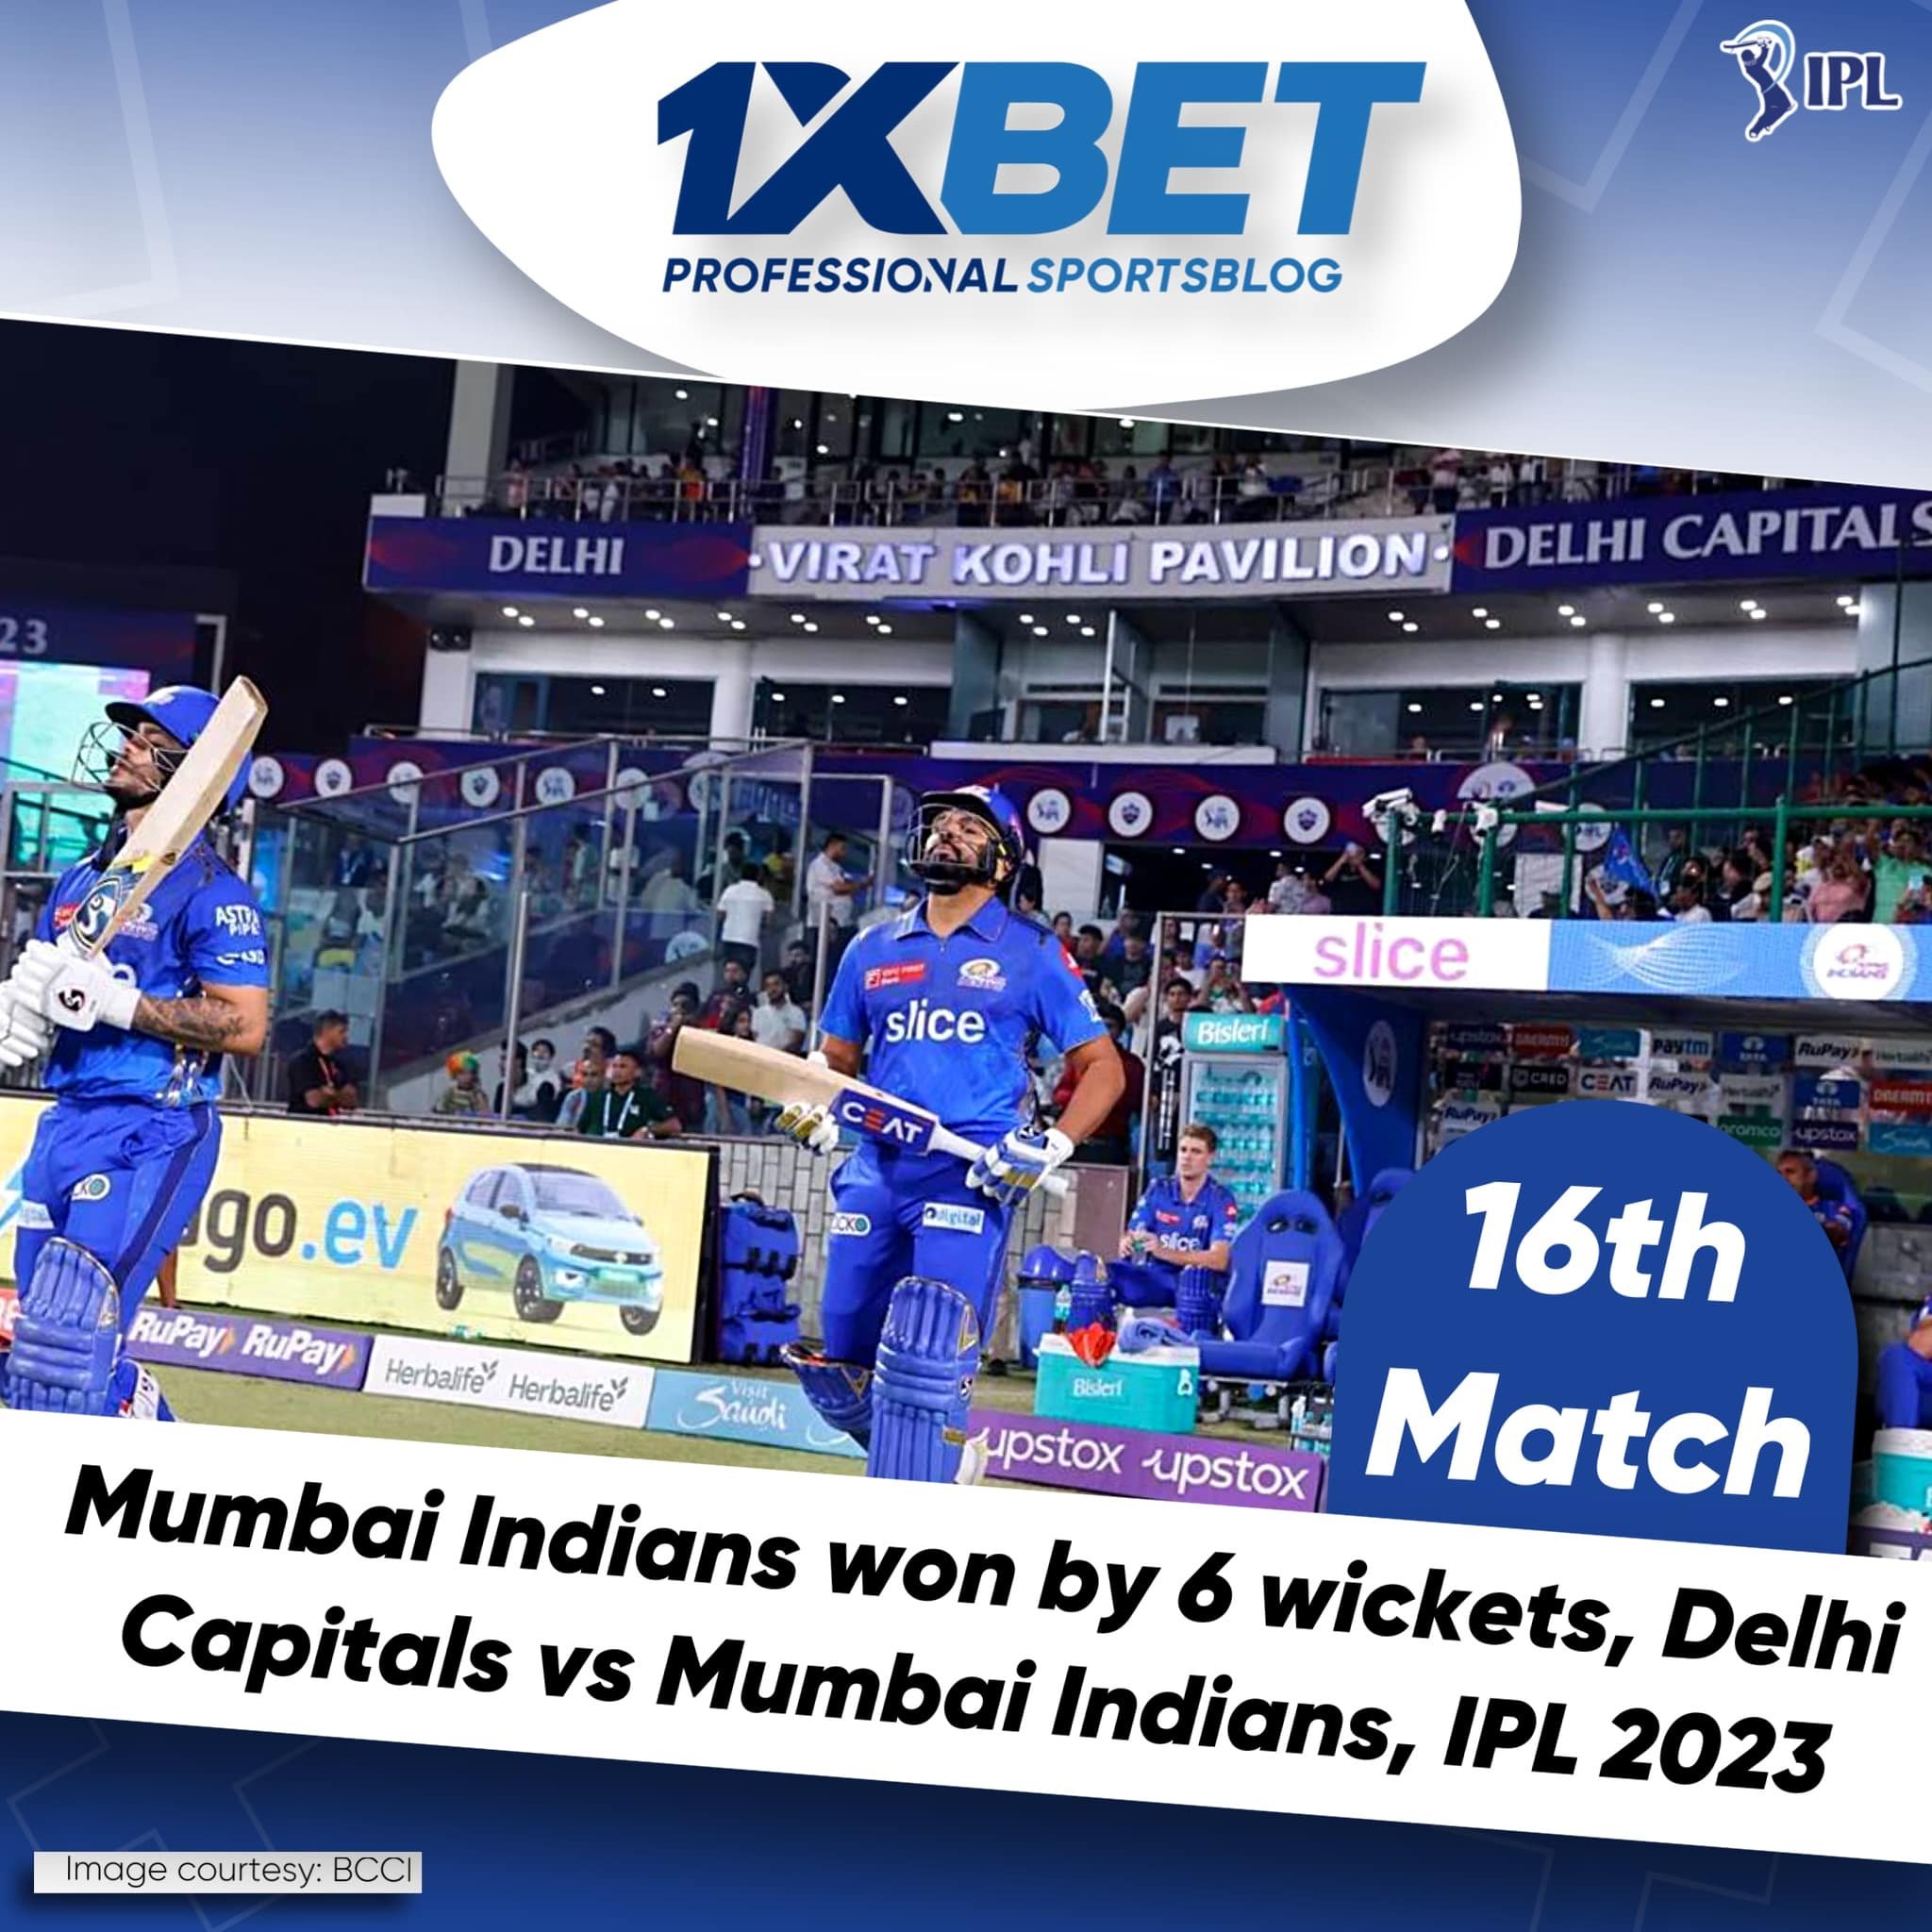 Mumbai Indians won by 6 wickets